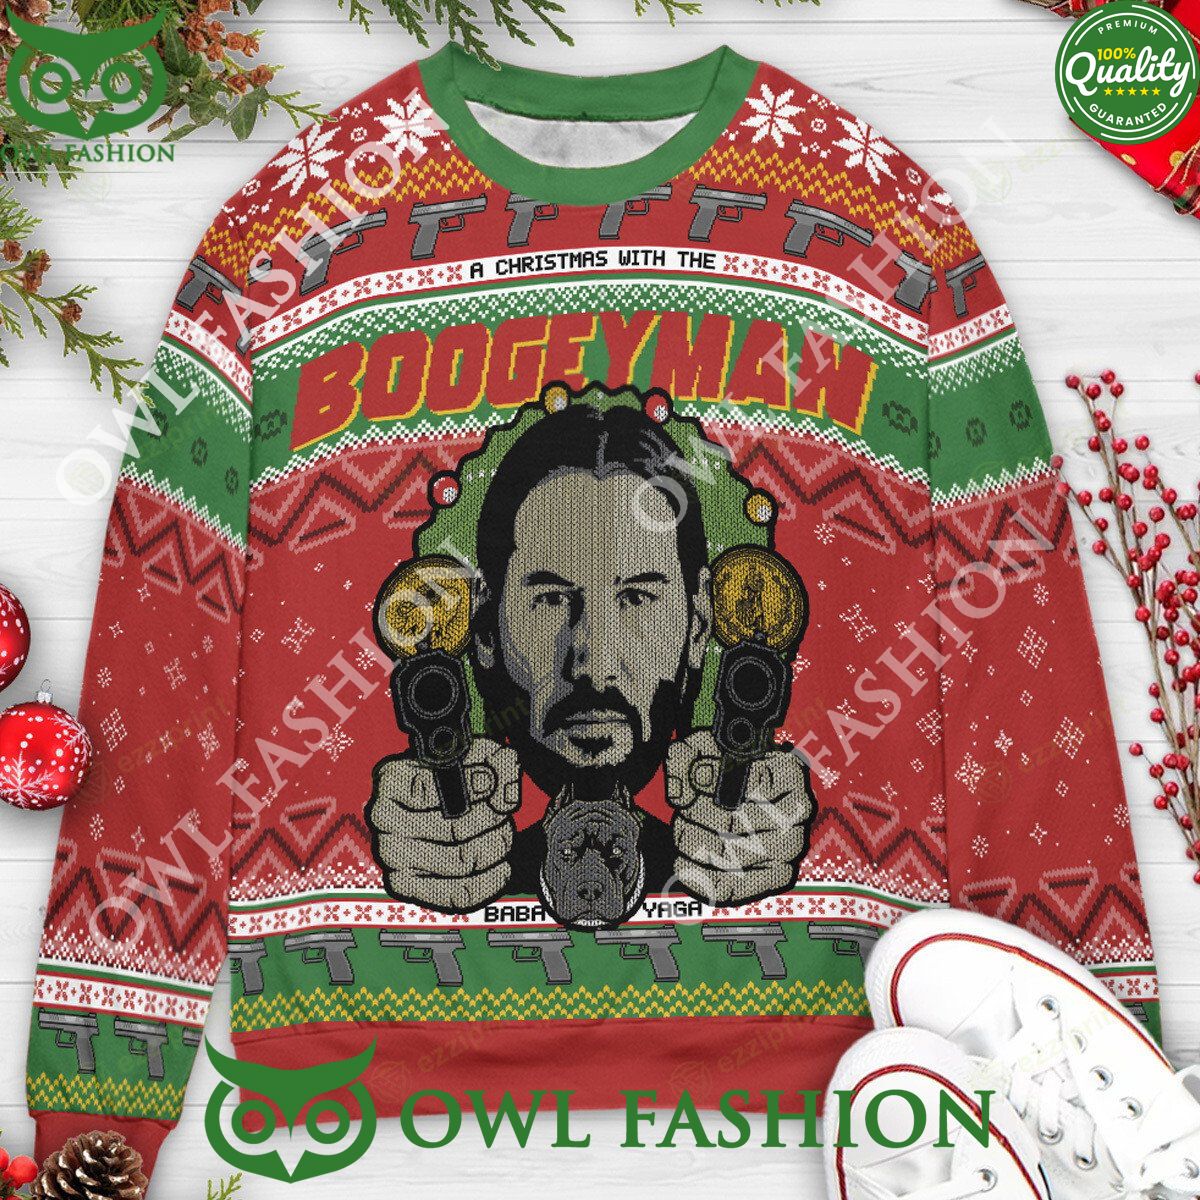 boogeyman john wick christmas sweater 1 6TJMj.jpg